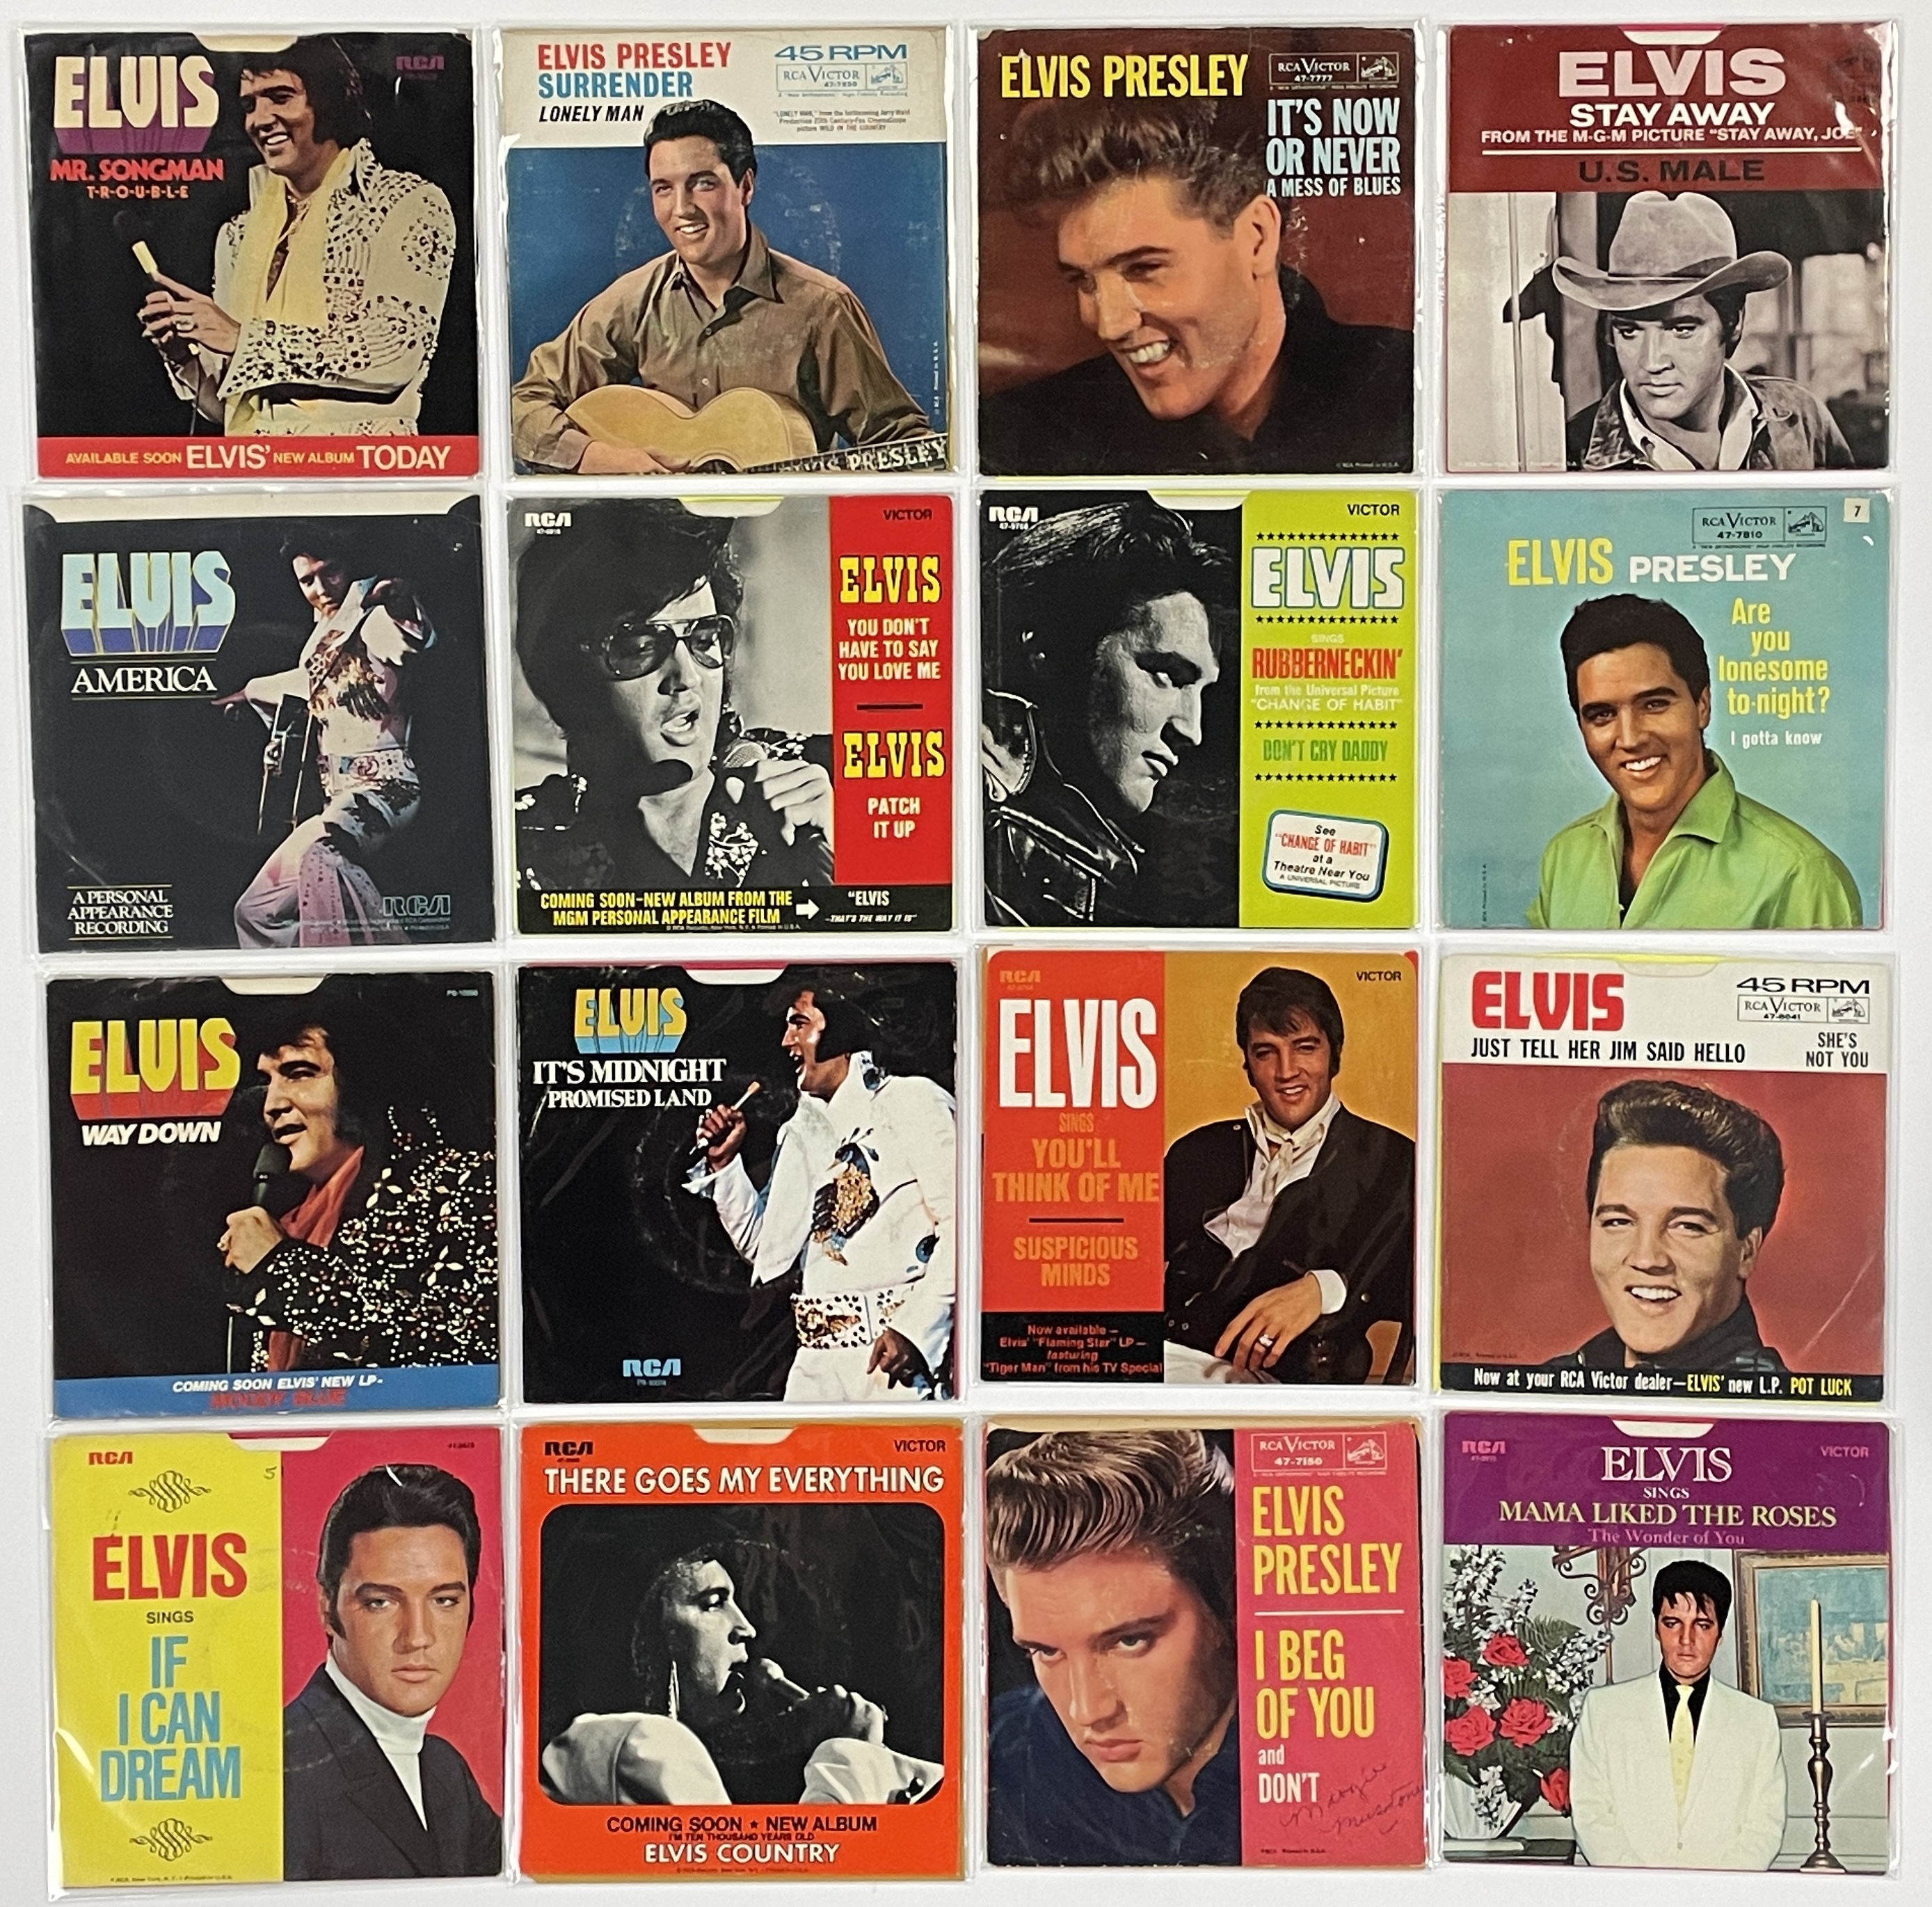 Promised Land (PB 10074)  Elvis Presley Official Site